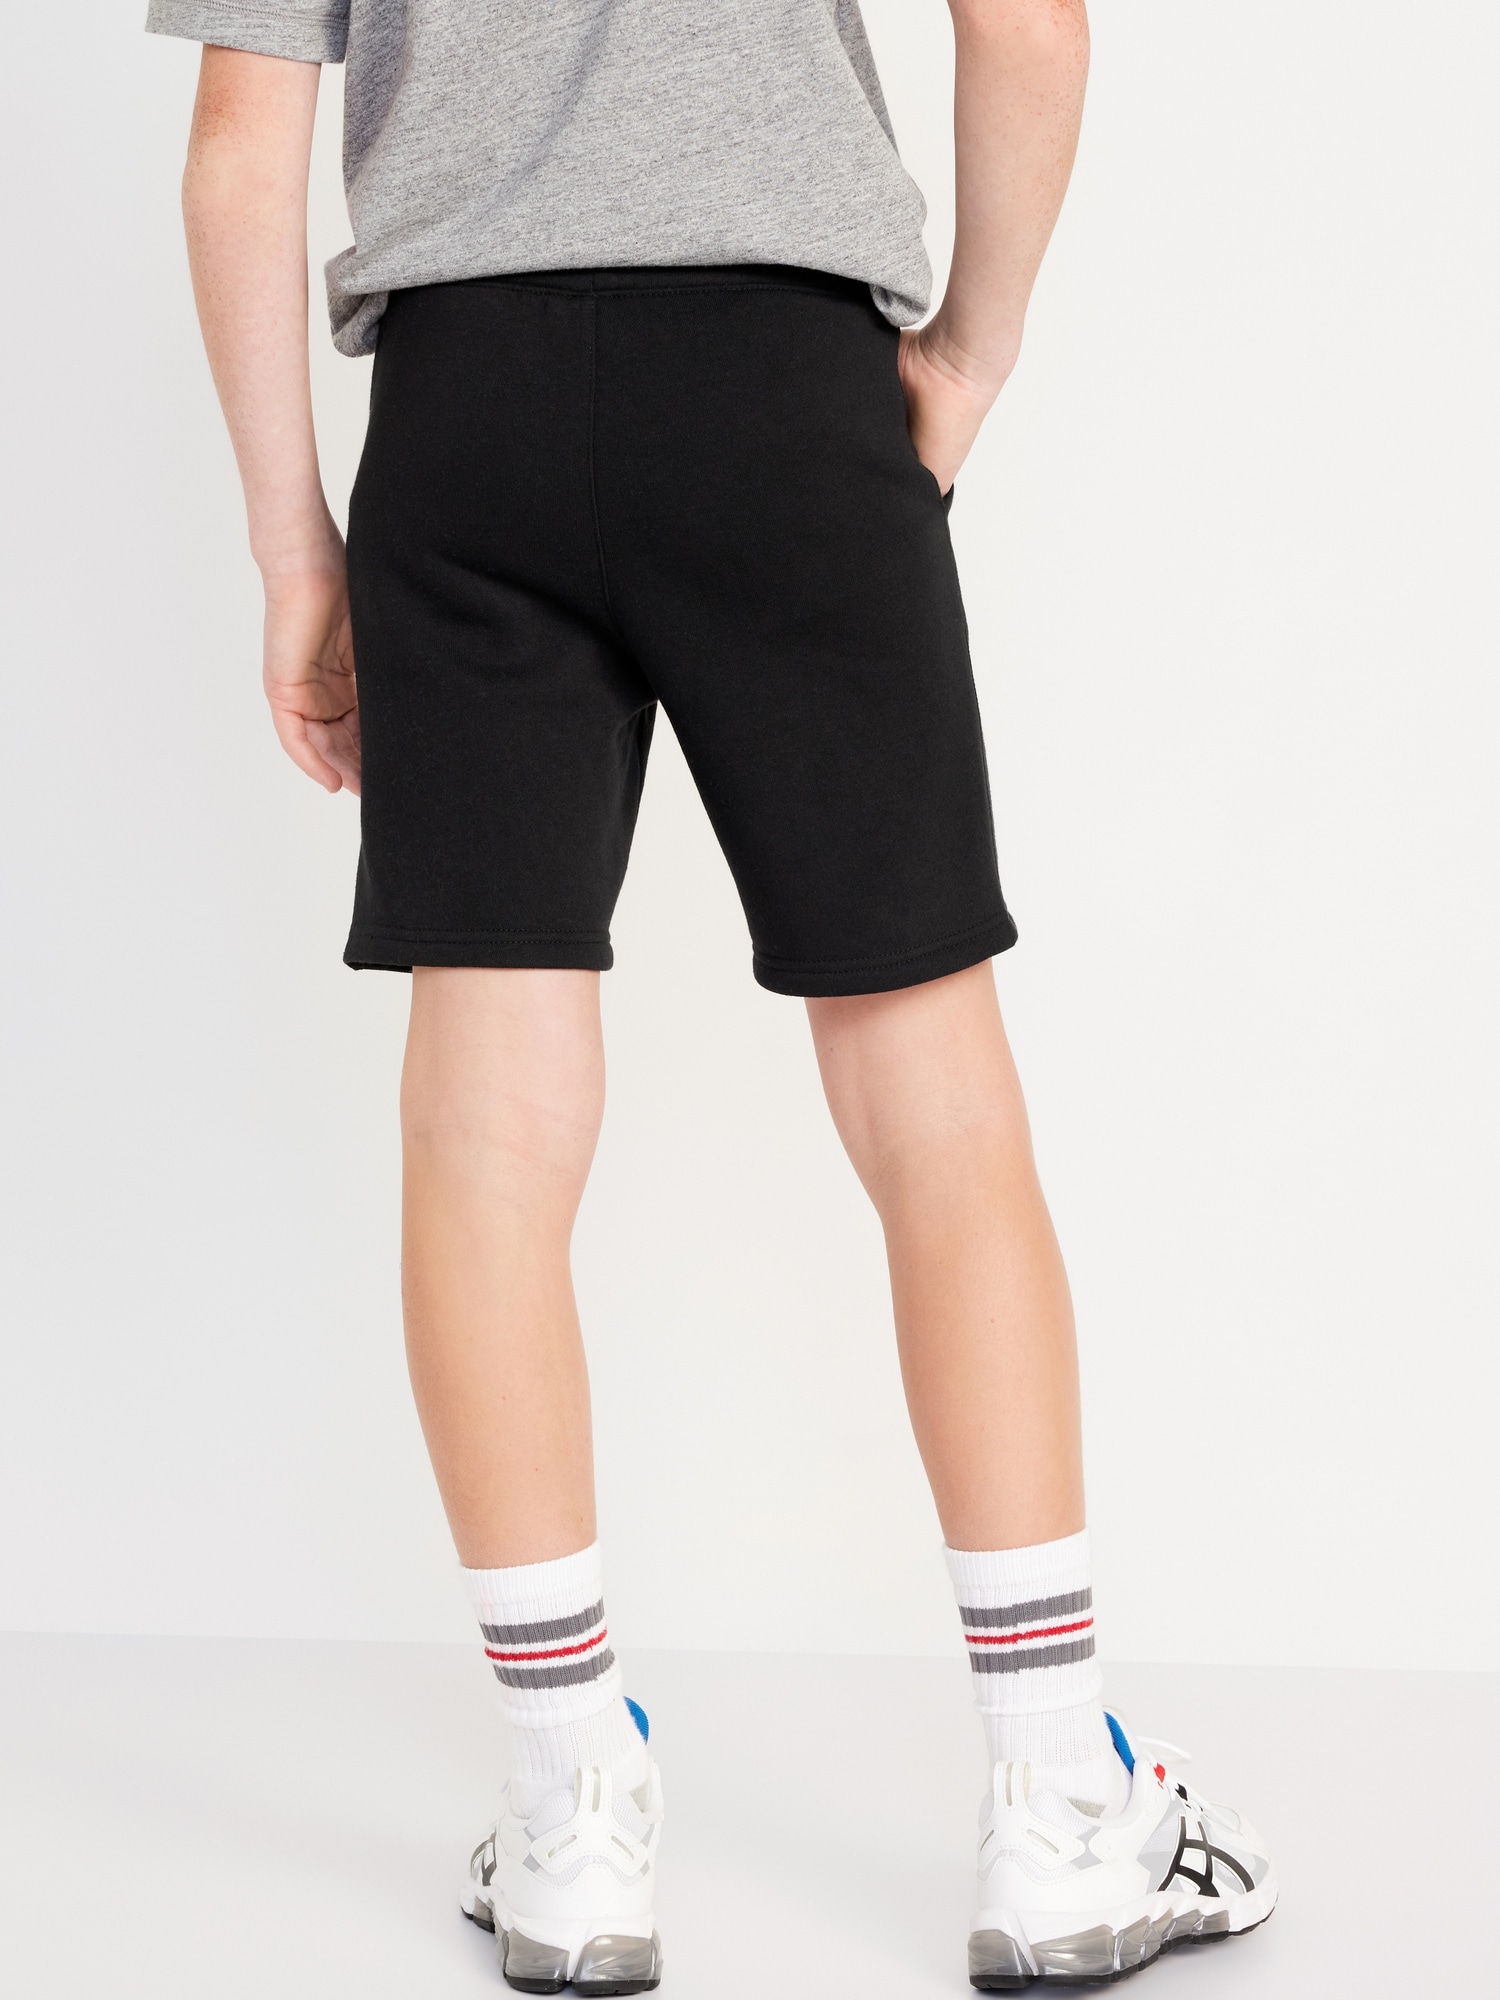 Licensed Graphic Fleece Jogger Shorts for Boys